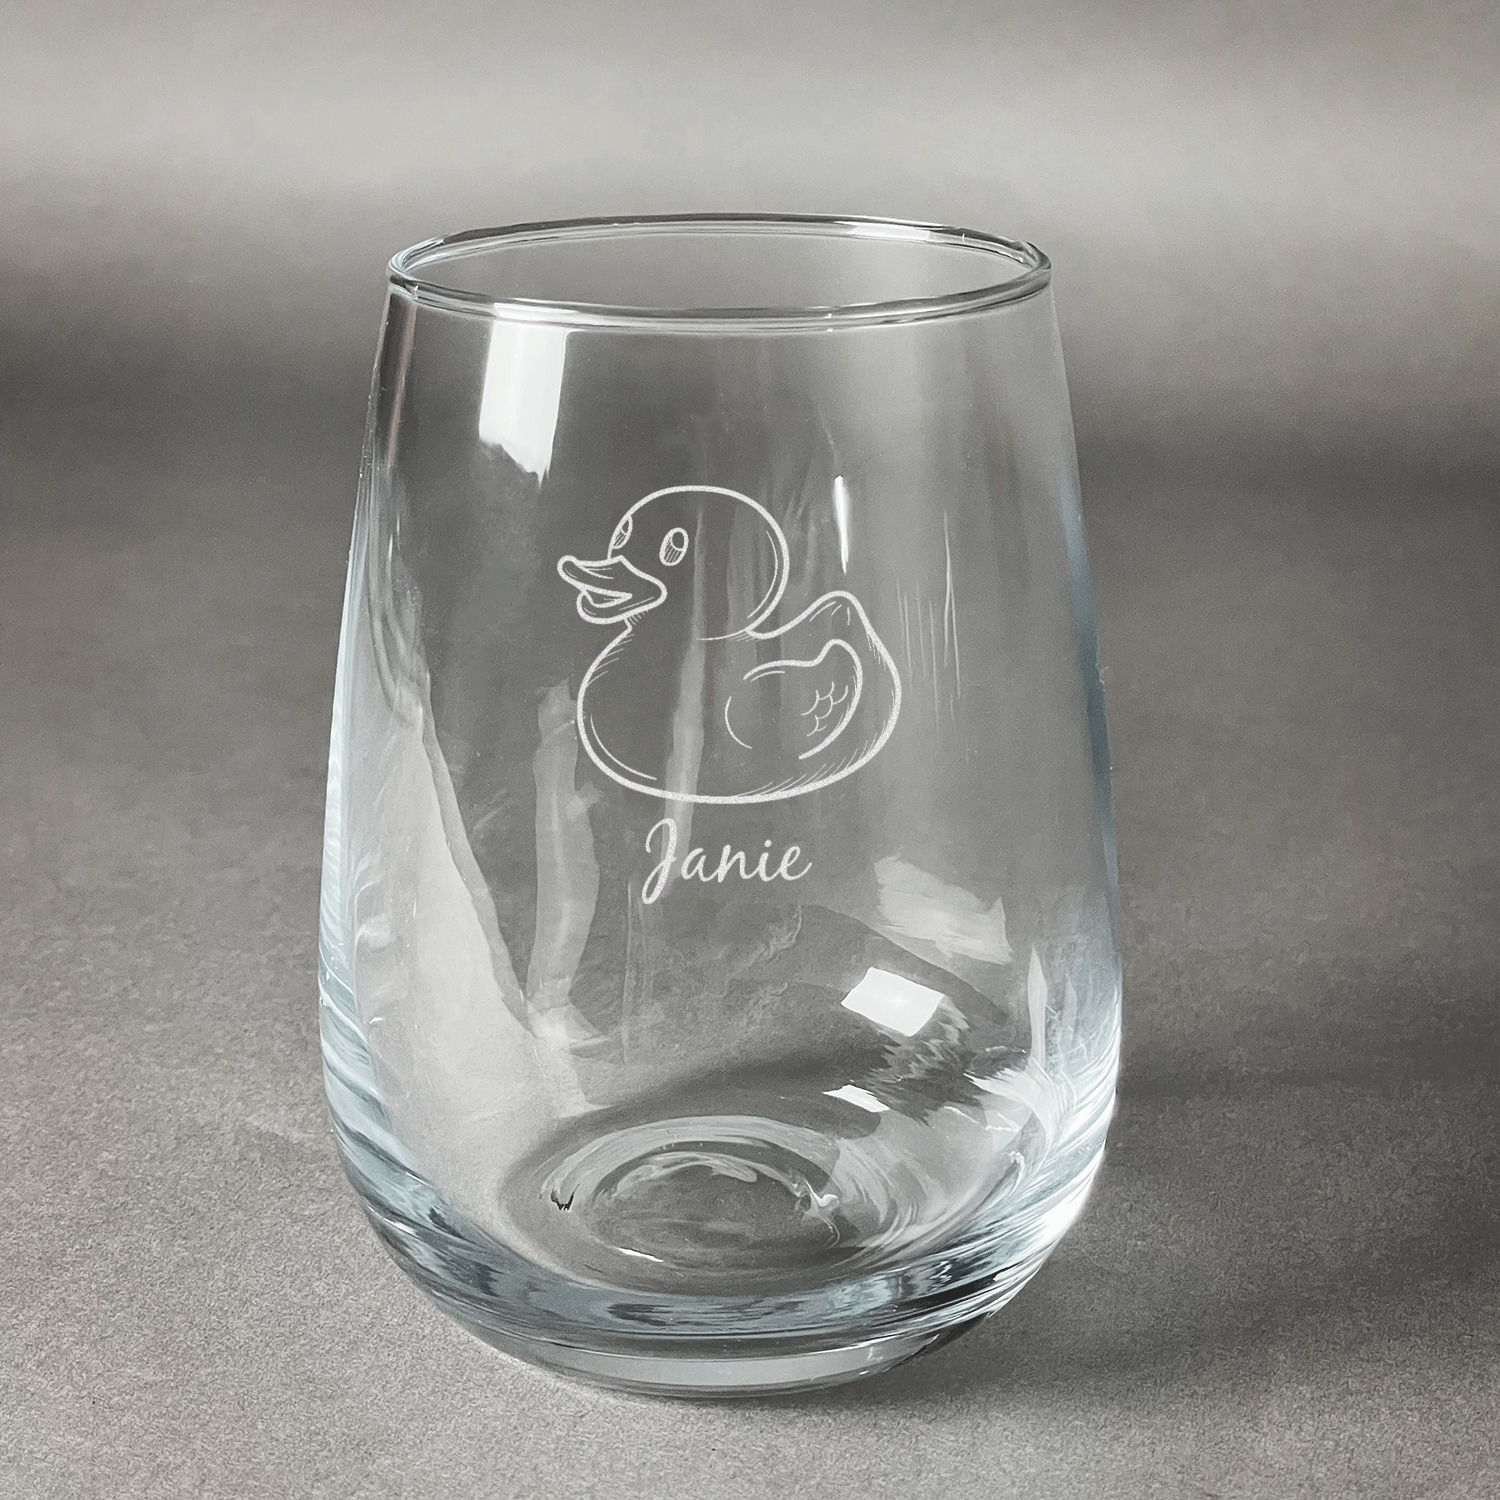 Custom Design Etched Wine Glass